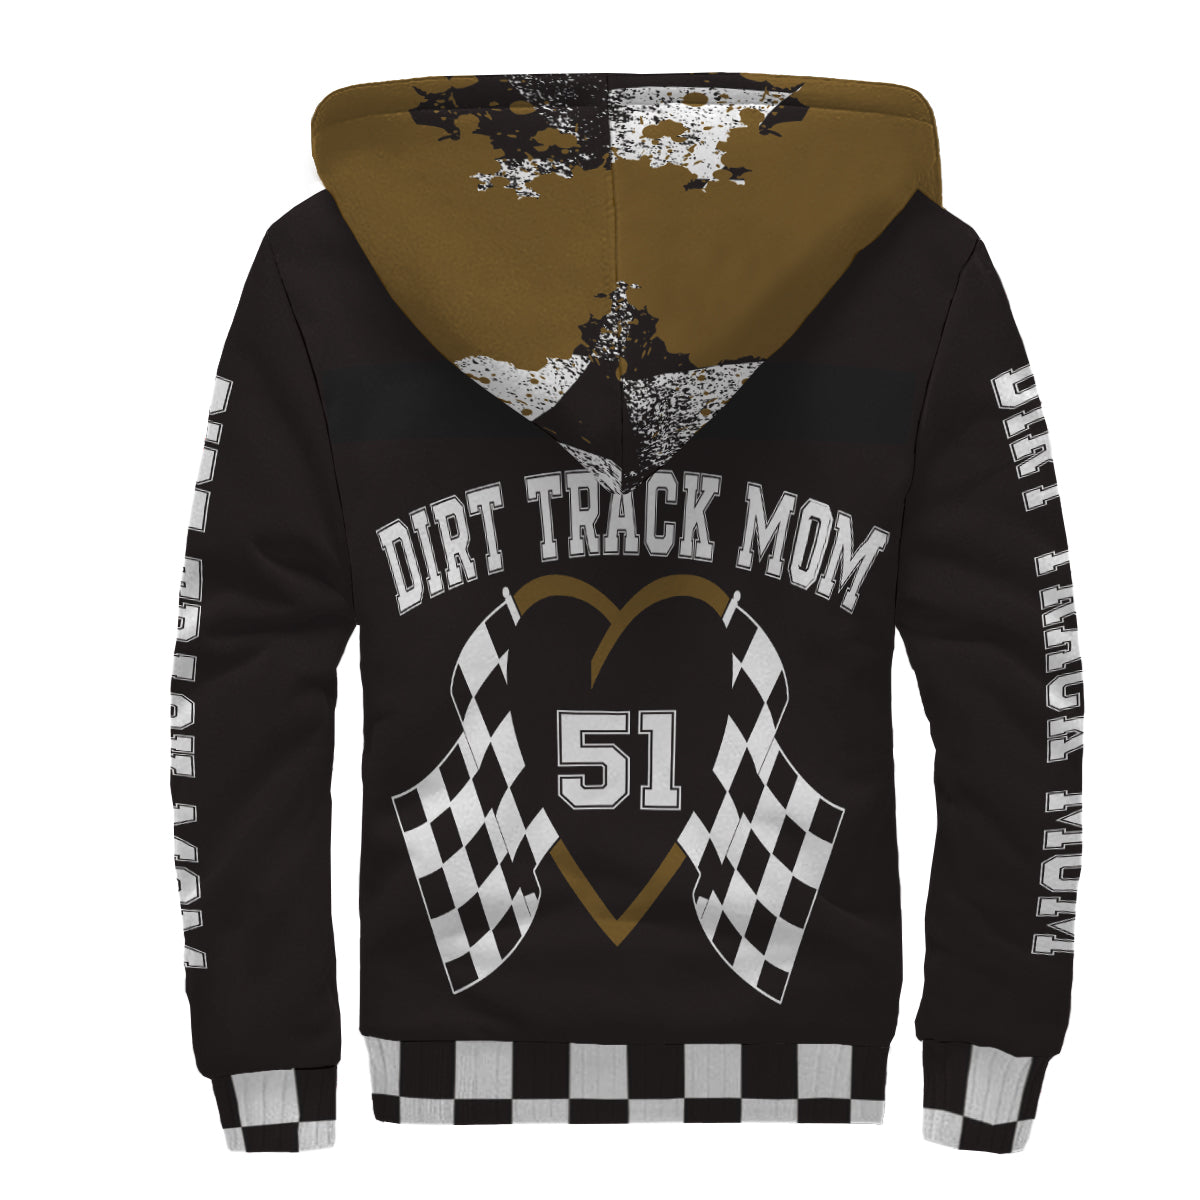 Dirt Track Mom 51 Sherpa Jacket